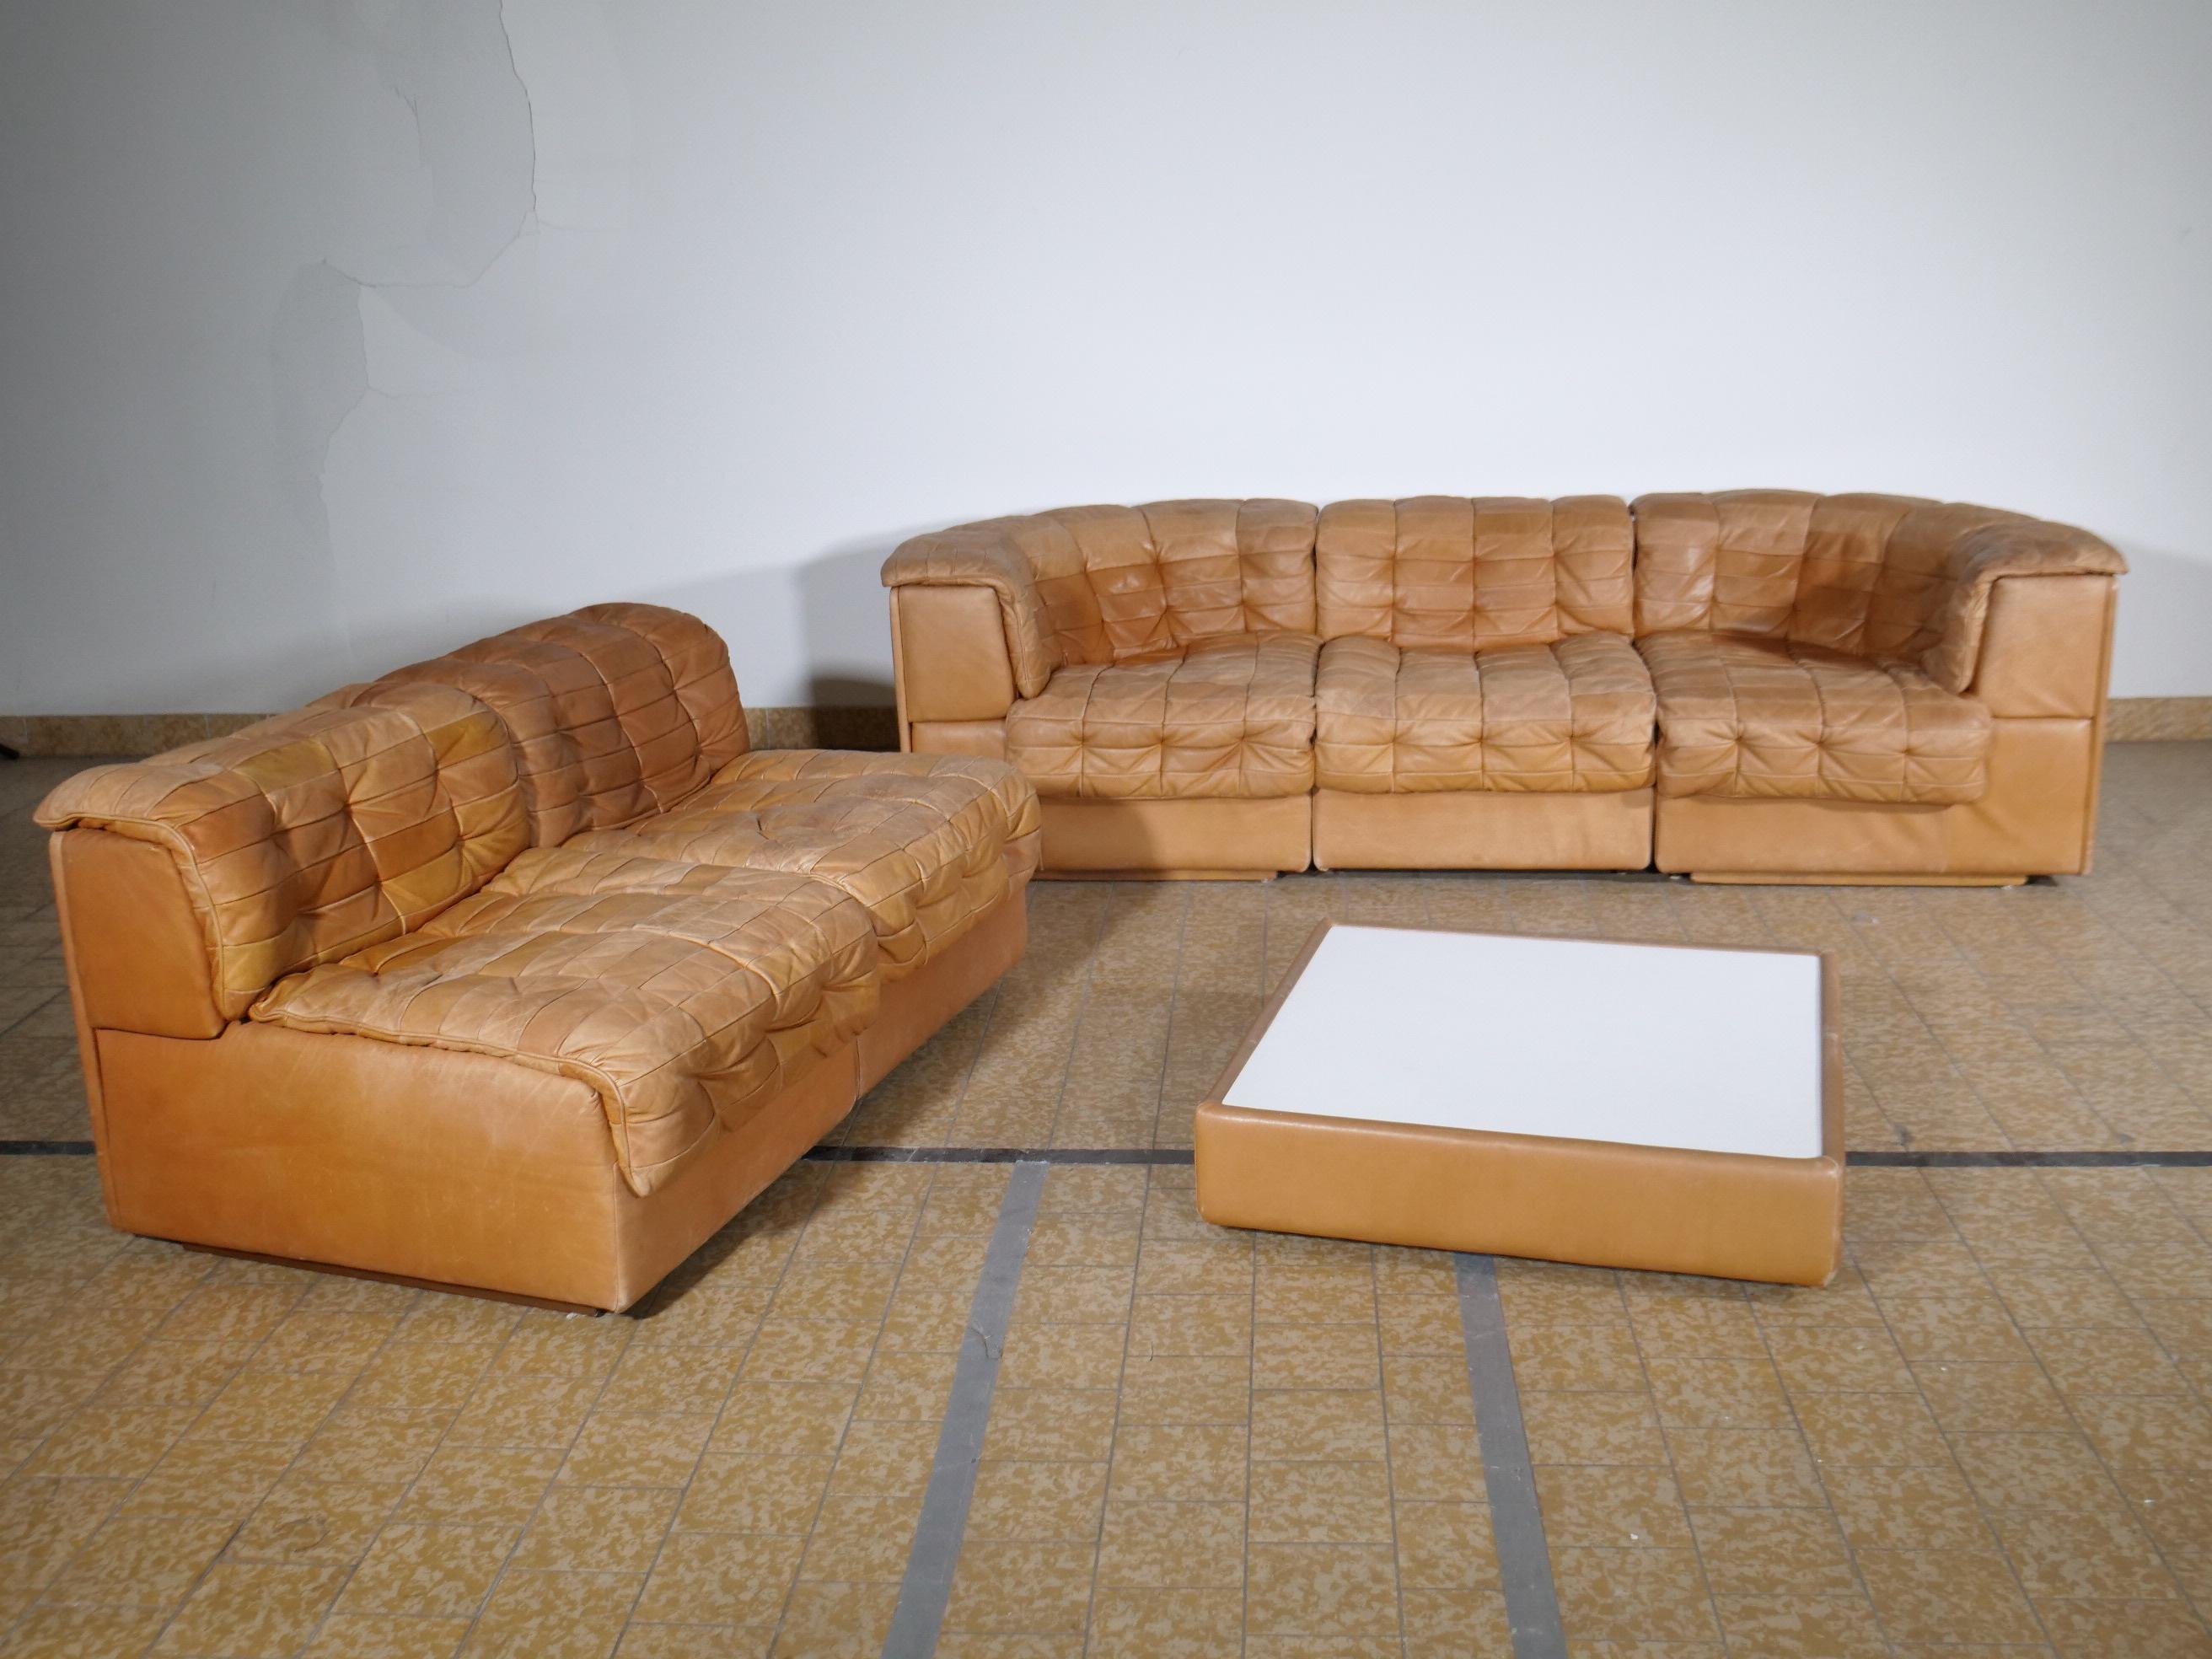 De Sede Ds 11 Patchwork-Sofa aus Leder mit Couchtisch, 1970er Jahre (Ende des 20. Jahrhunderts)